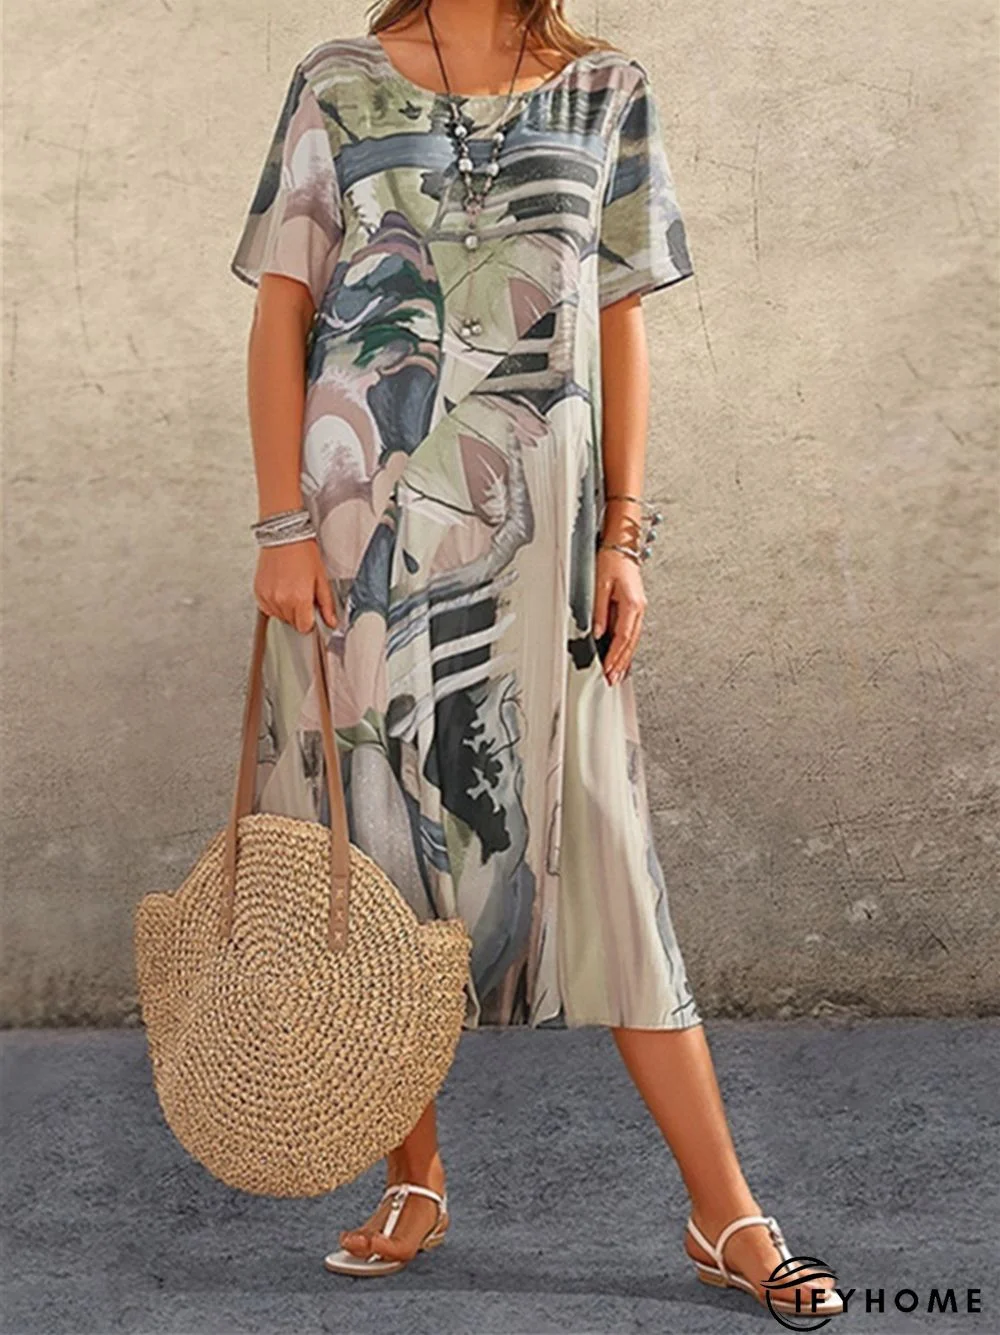 Fashion Casual Print Dress Short Sleeved Beach Dress | IFYHOME